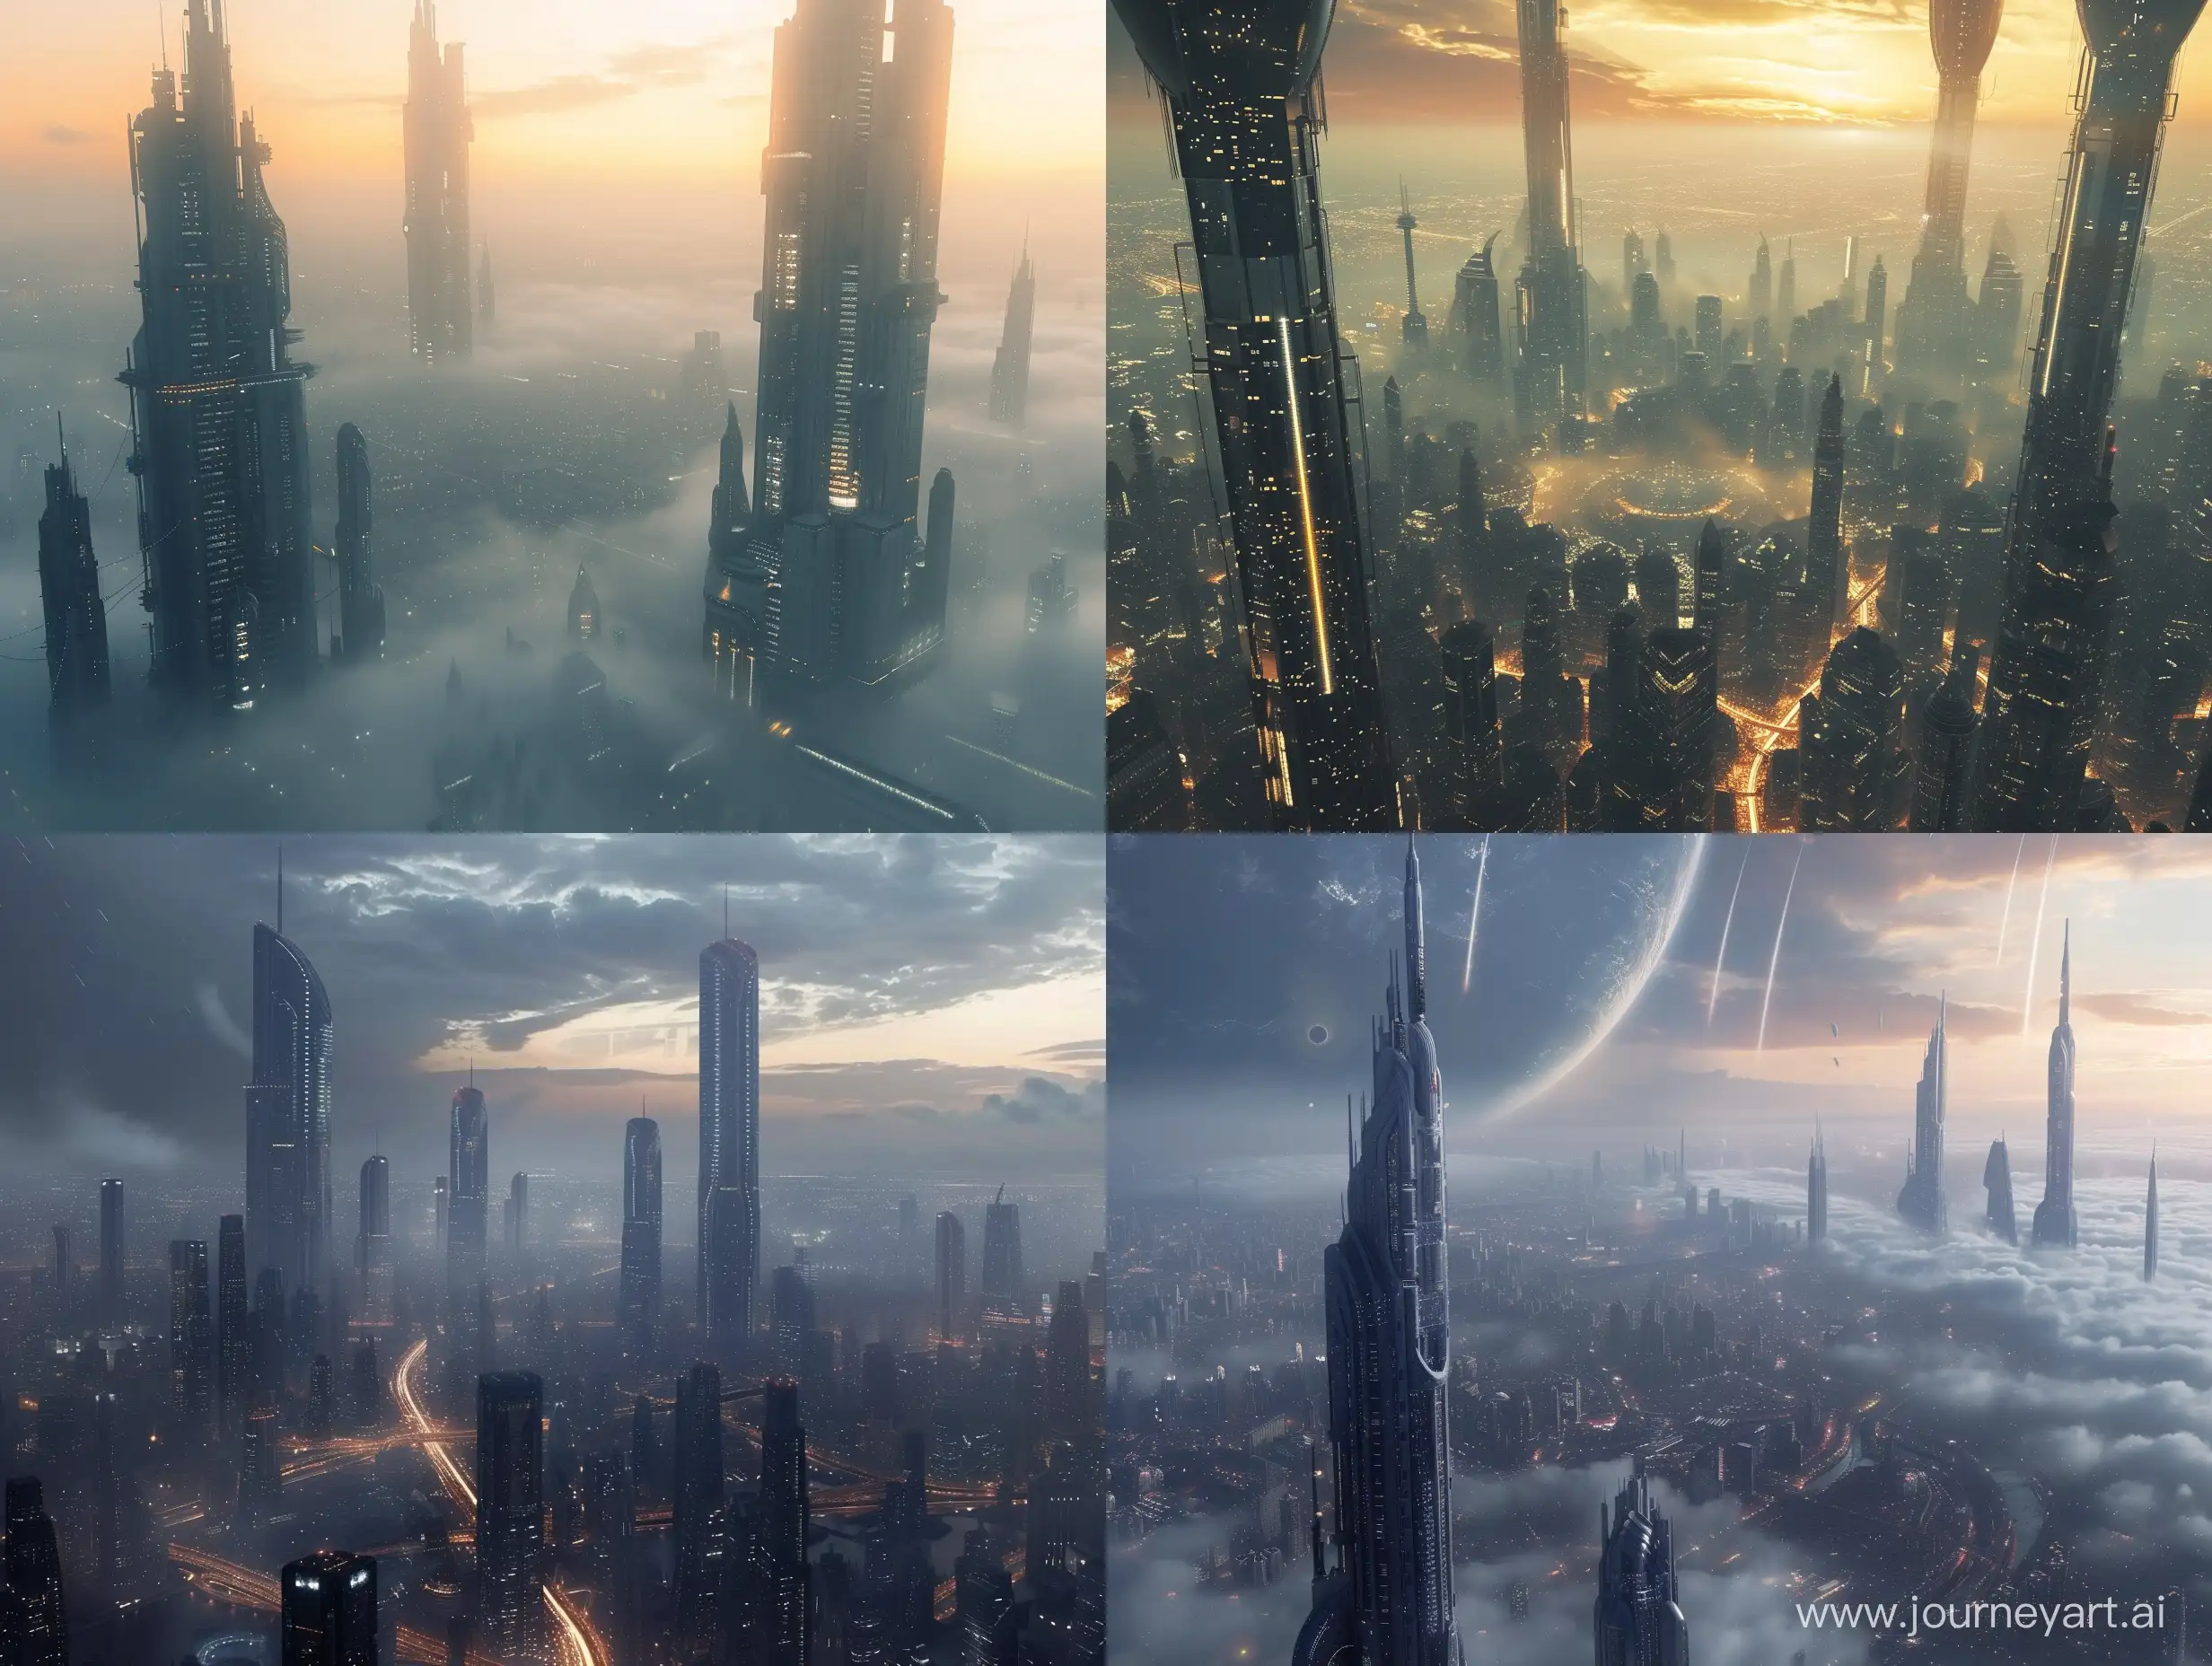 Futuristic-City-Skyline-Cinematic-Marvel-with-a-64-Aspect-Ratio-Image-No-87686